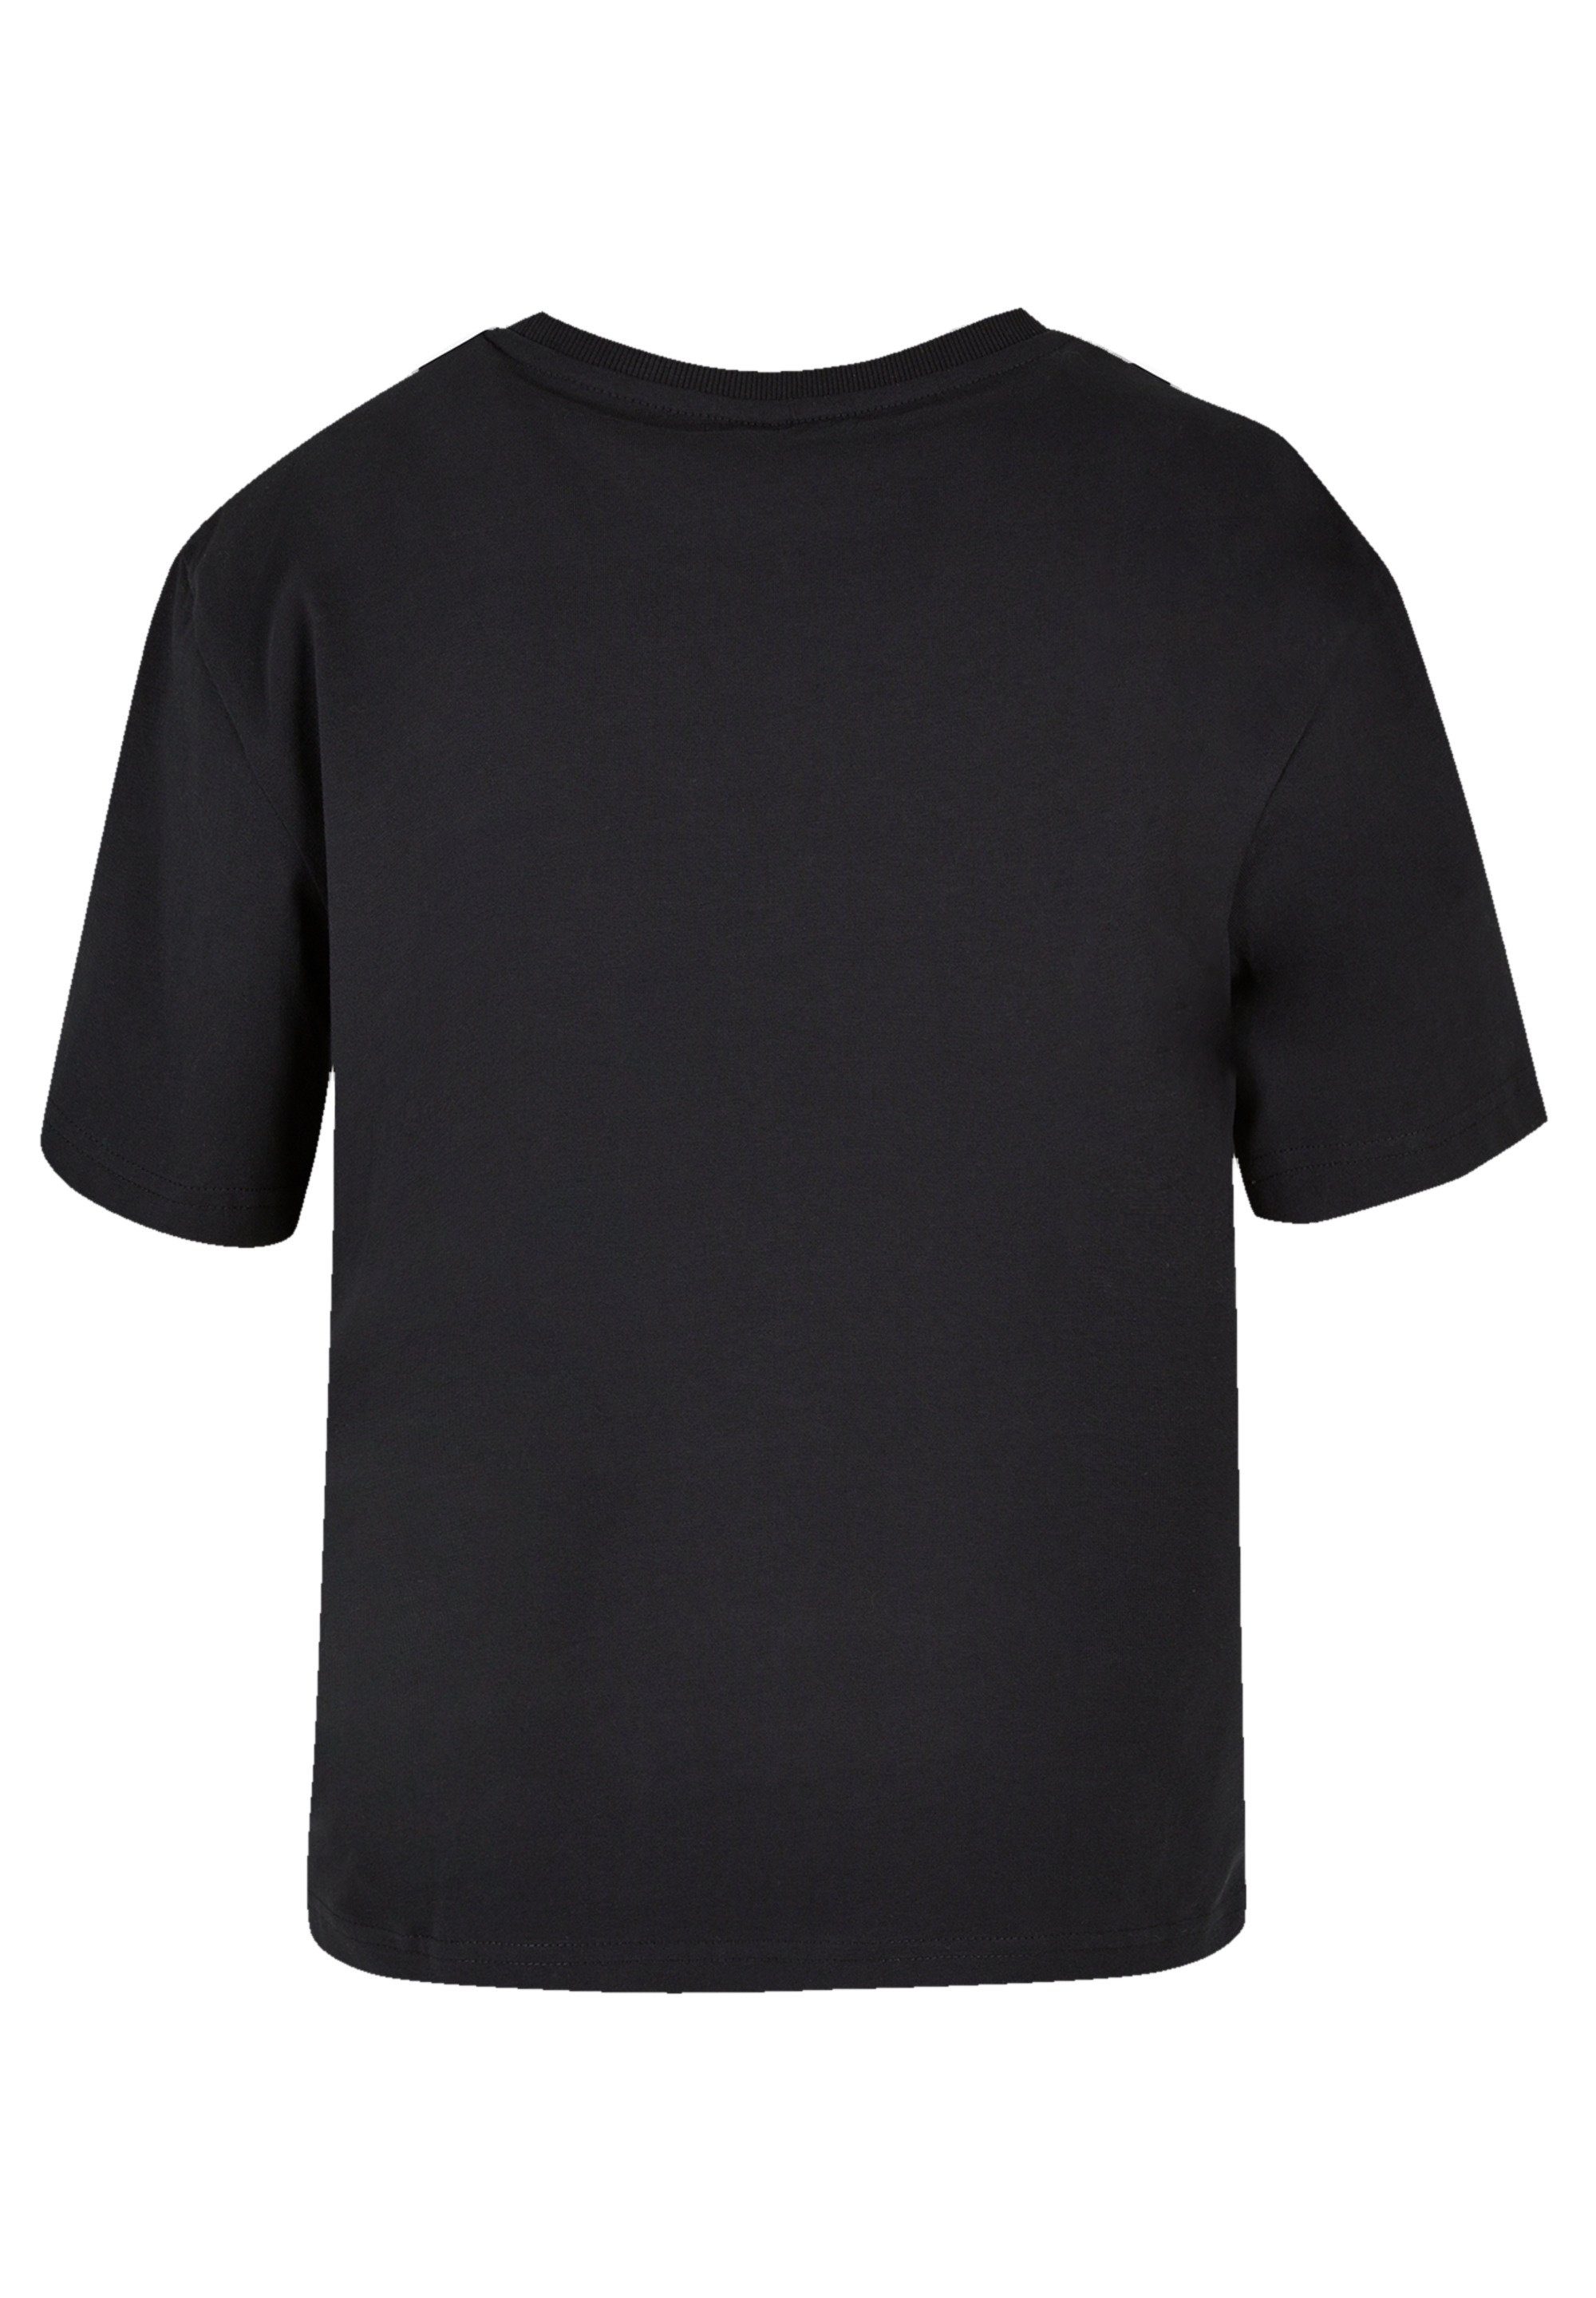 Band Qualität, Go Rock-Musik Band, Ramones Let's Ho Rock F4NT4STIC T-Shirt Hey Premium Musik